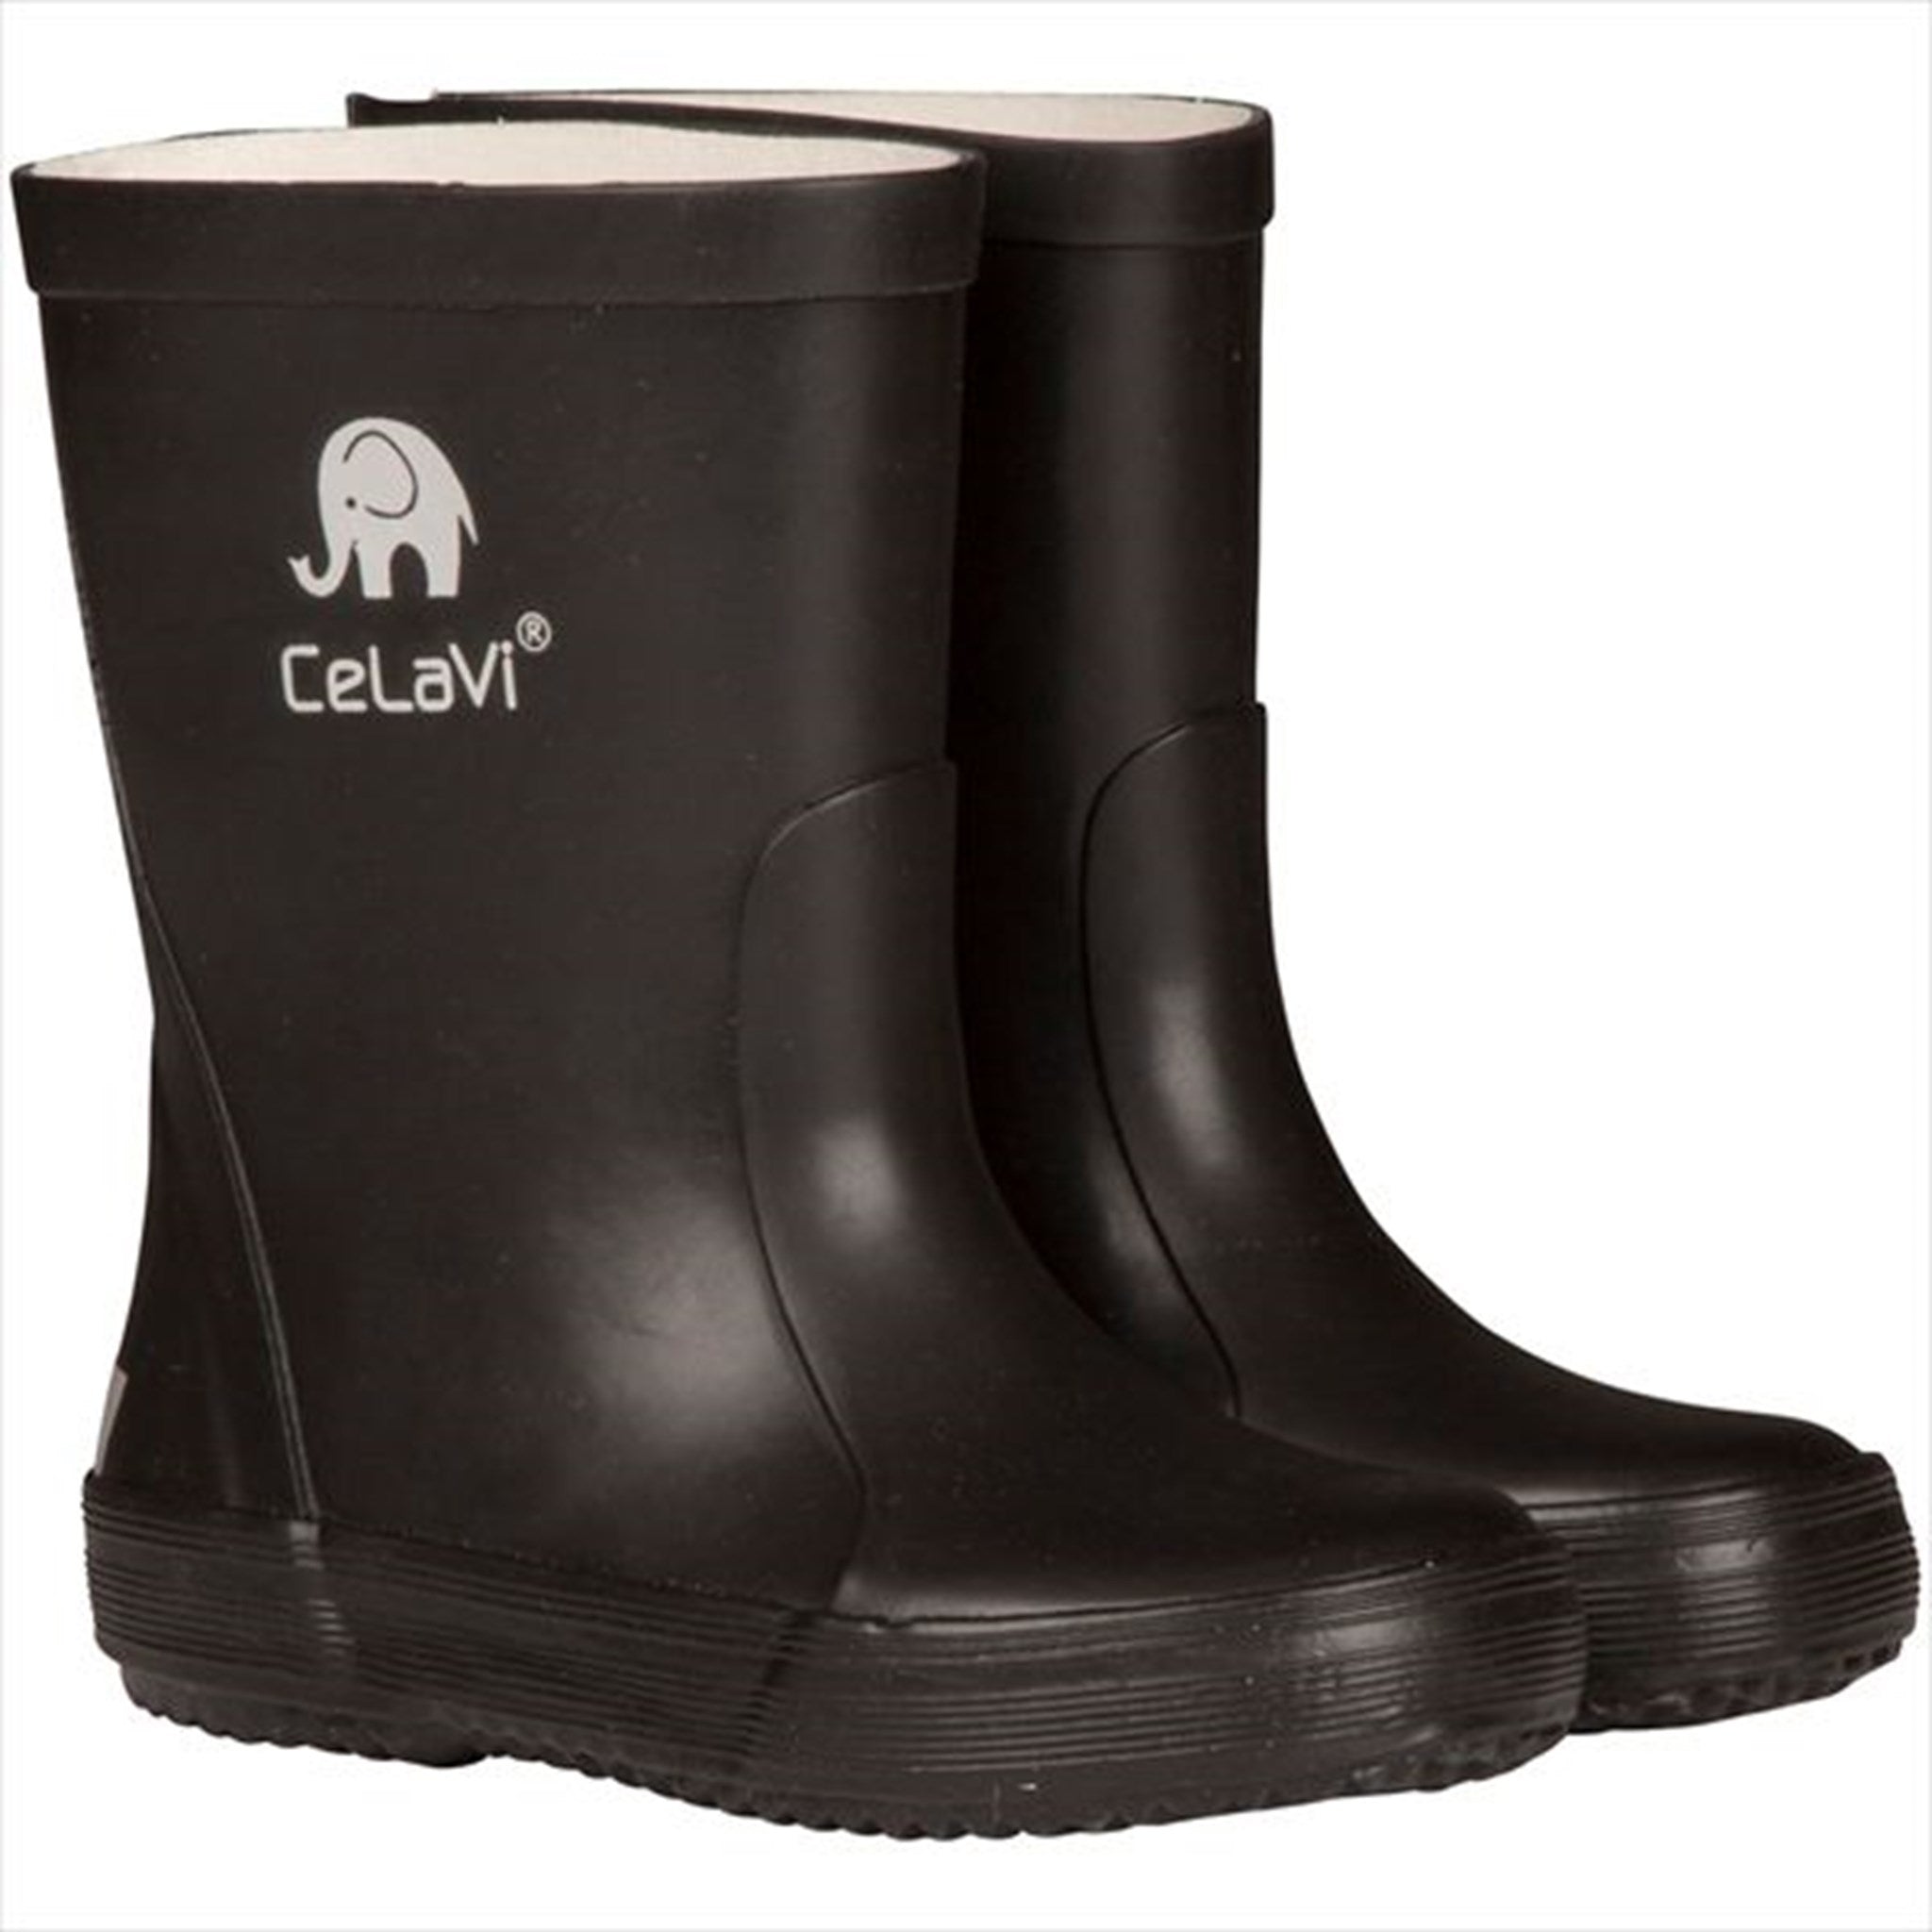 CeLaVi Wellies New Basic Boot Black